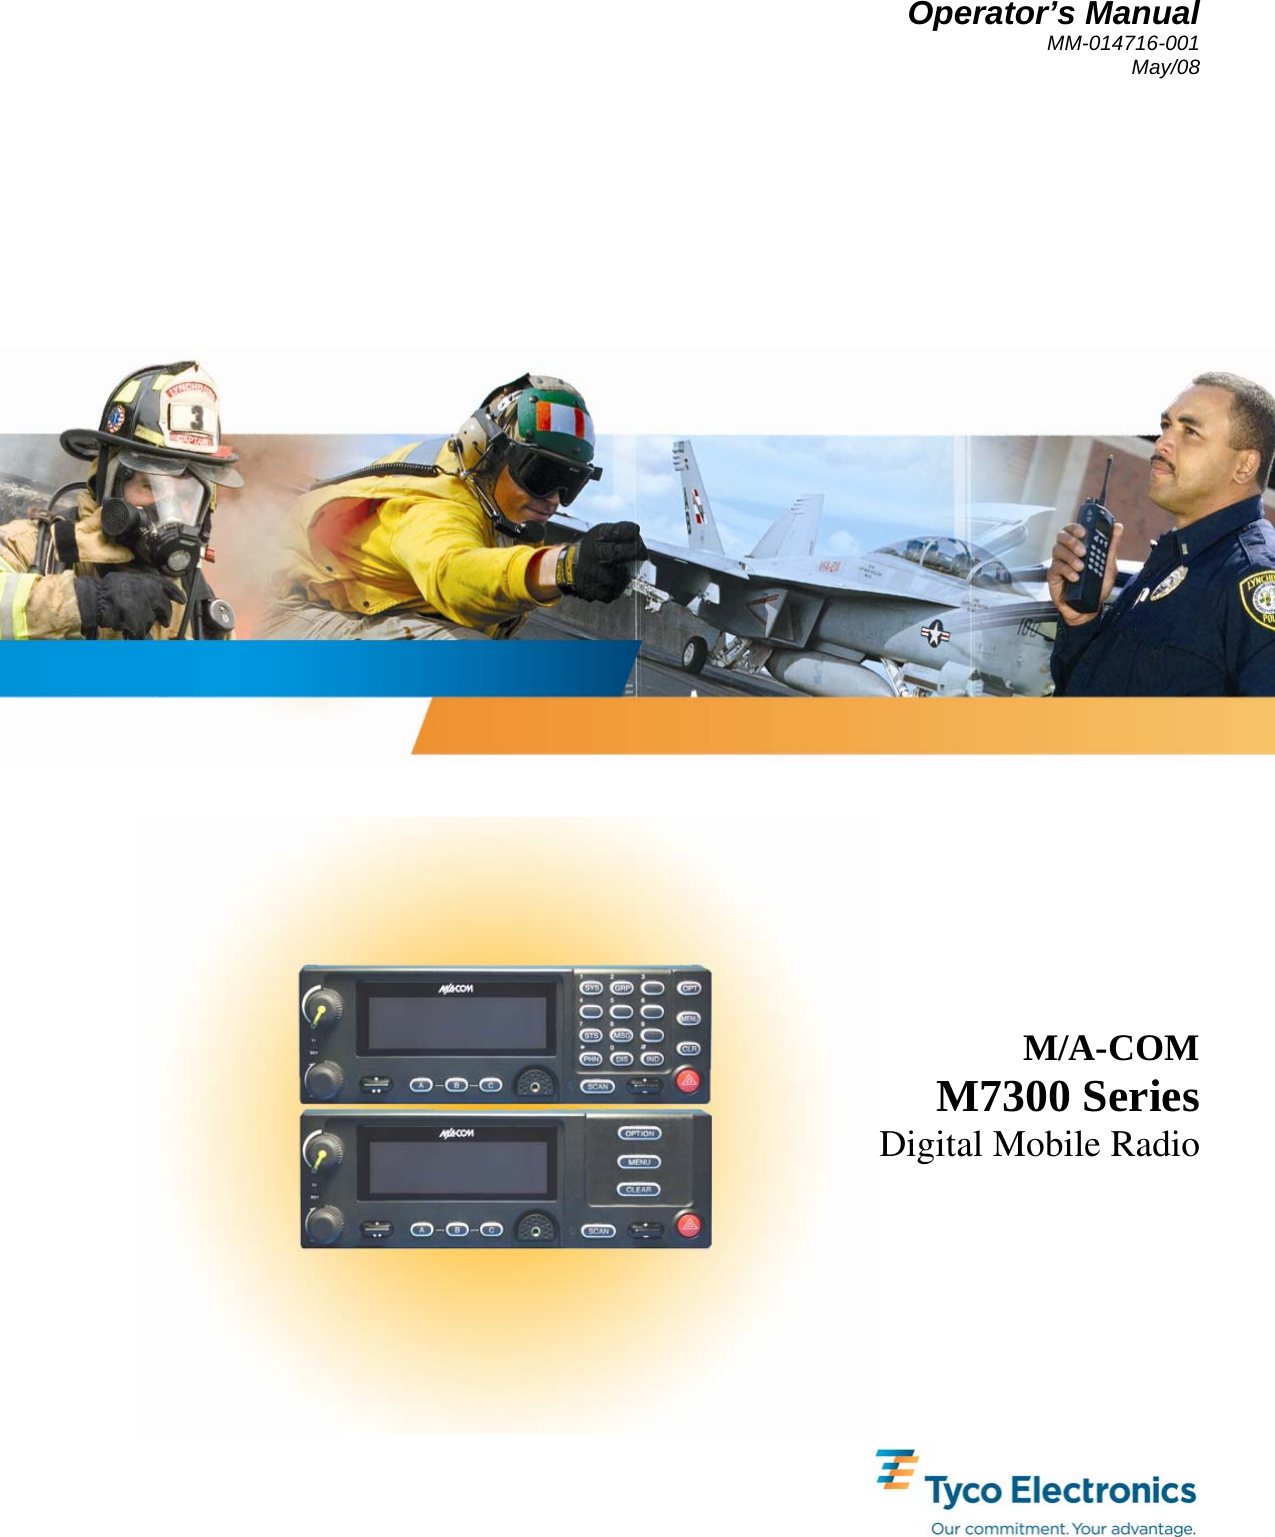 Operator’s Manual MM-014716-001 May/08        M/A-COM M7300 Series Digital Mobile Radio 